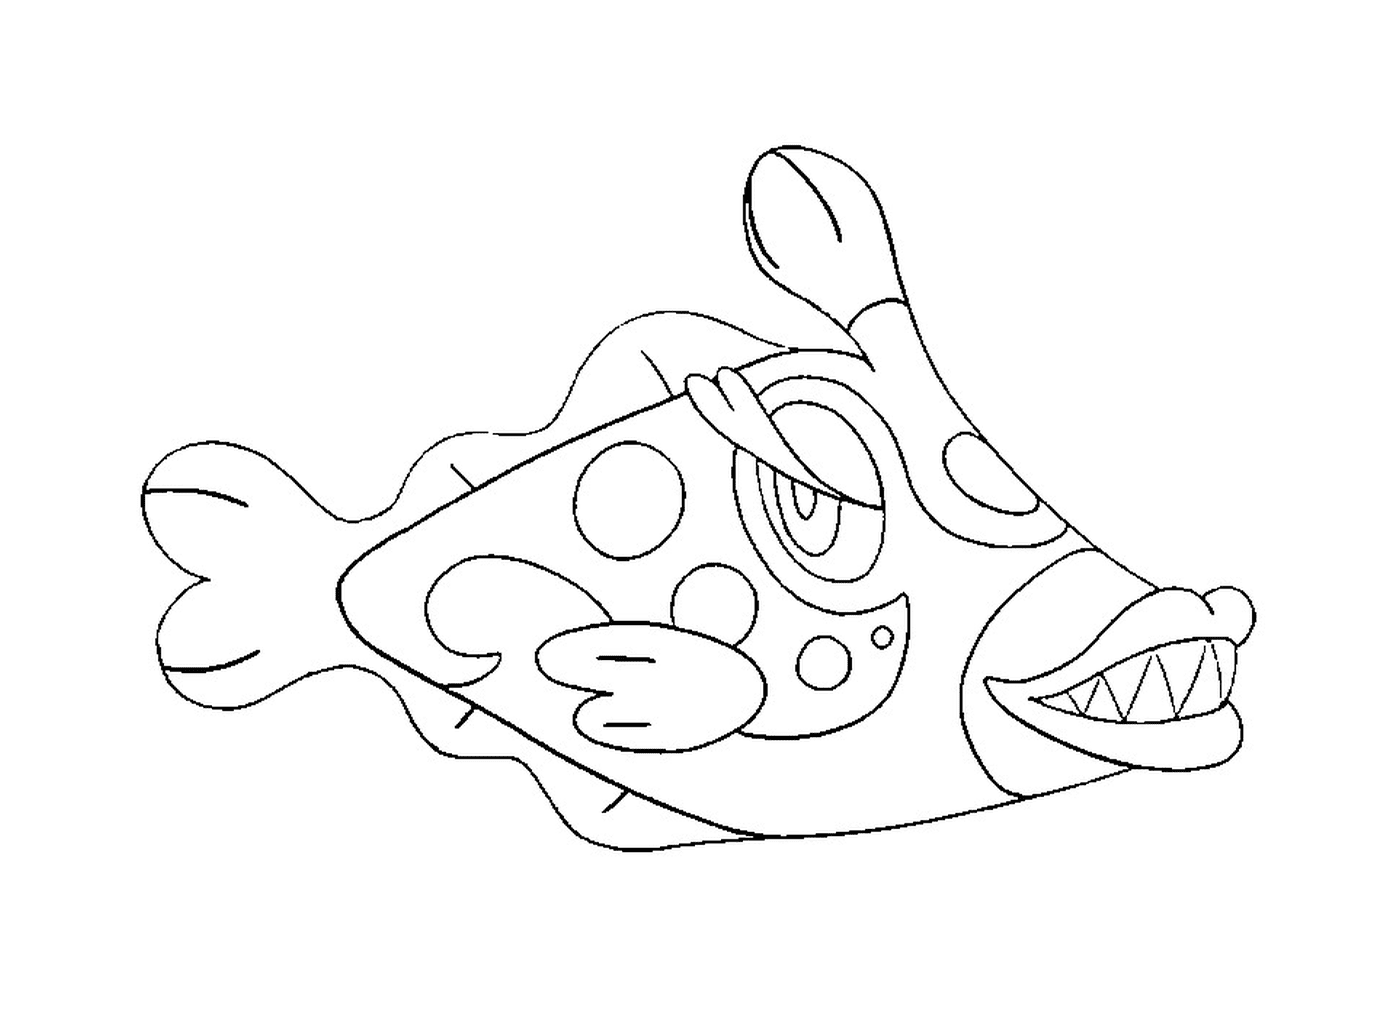  Denticrisse, a fish 